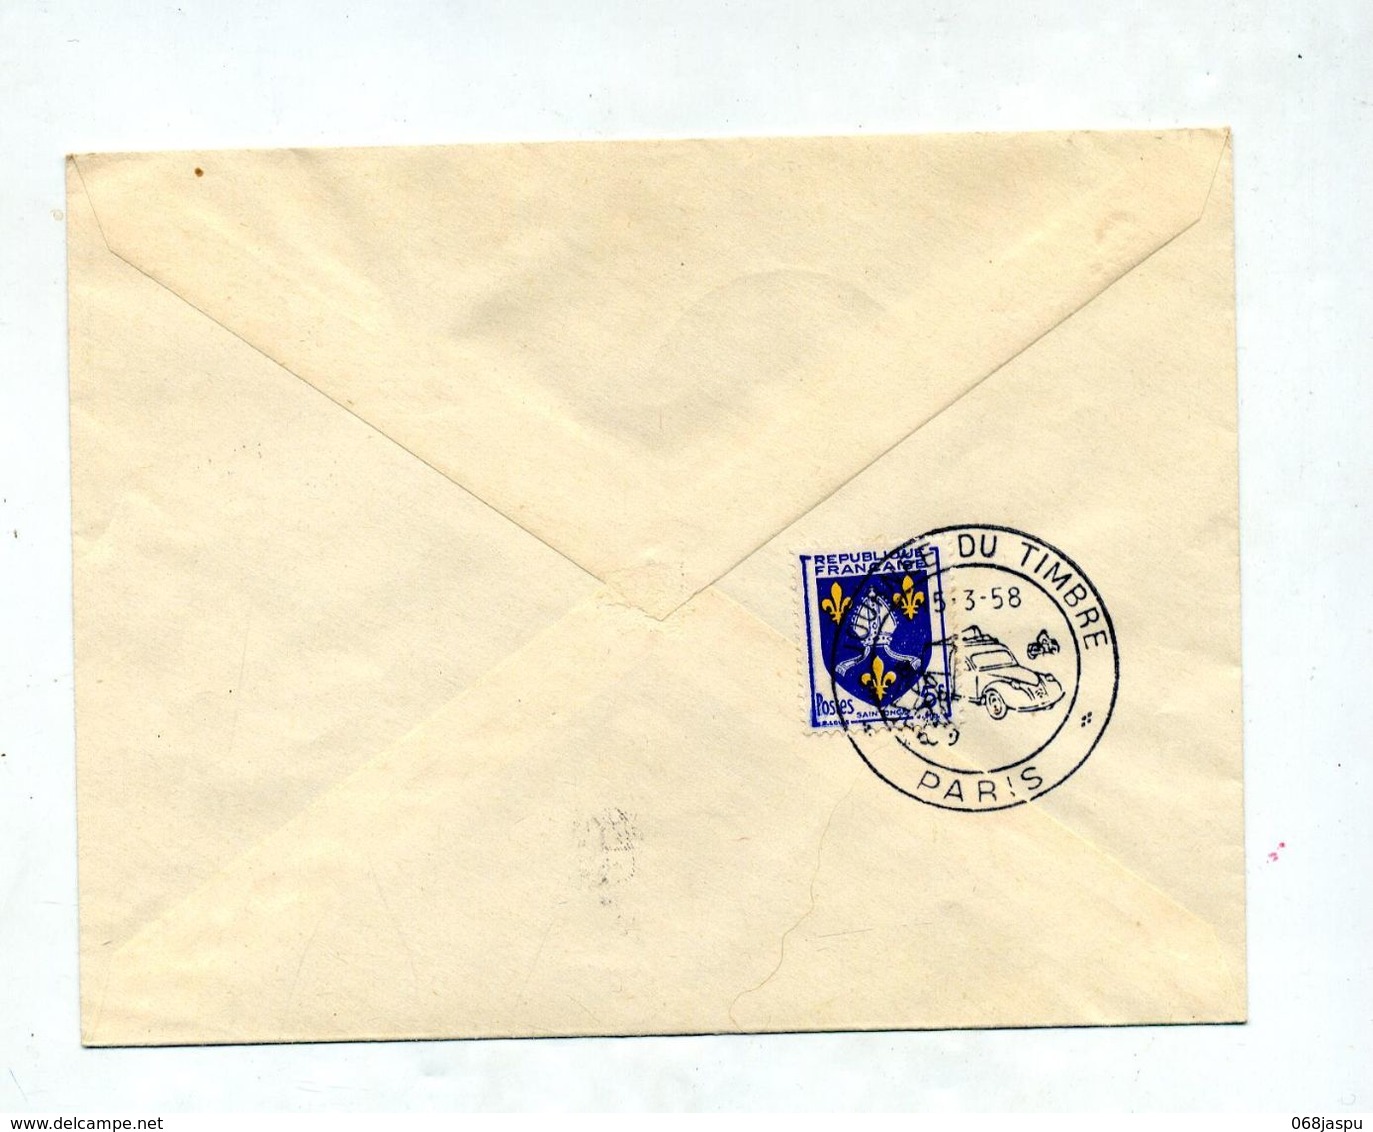 Lettre  Cachet  Oaris Journee Du Timbre 1958 Velo Voiture Moto - Commemorative Postmarks